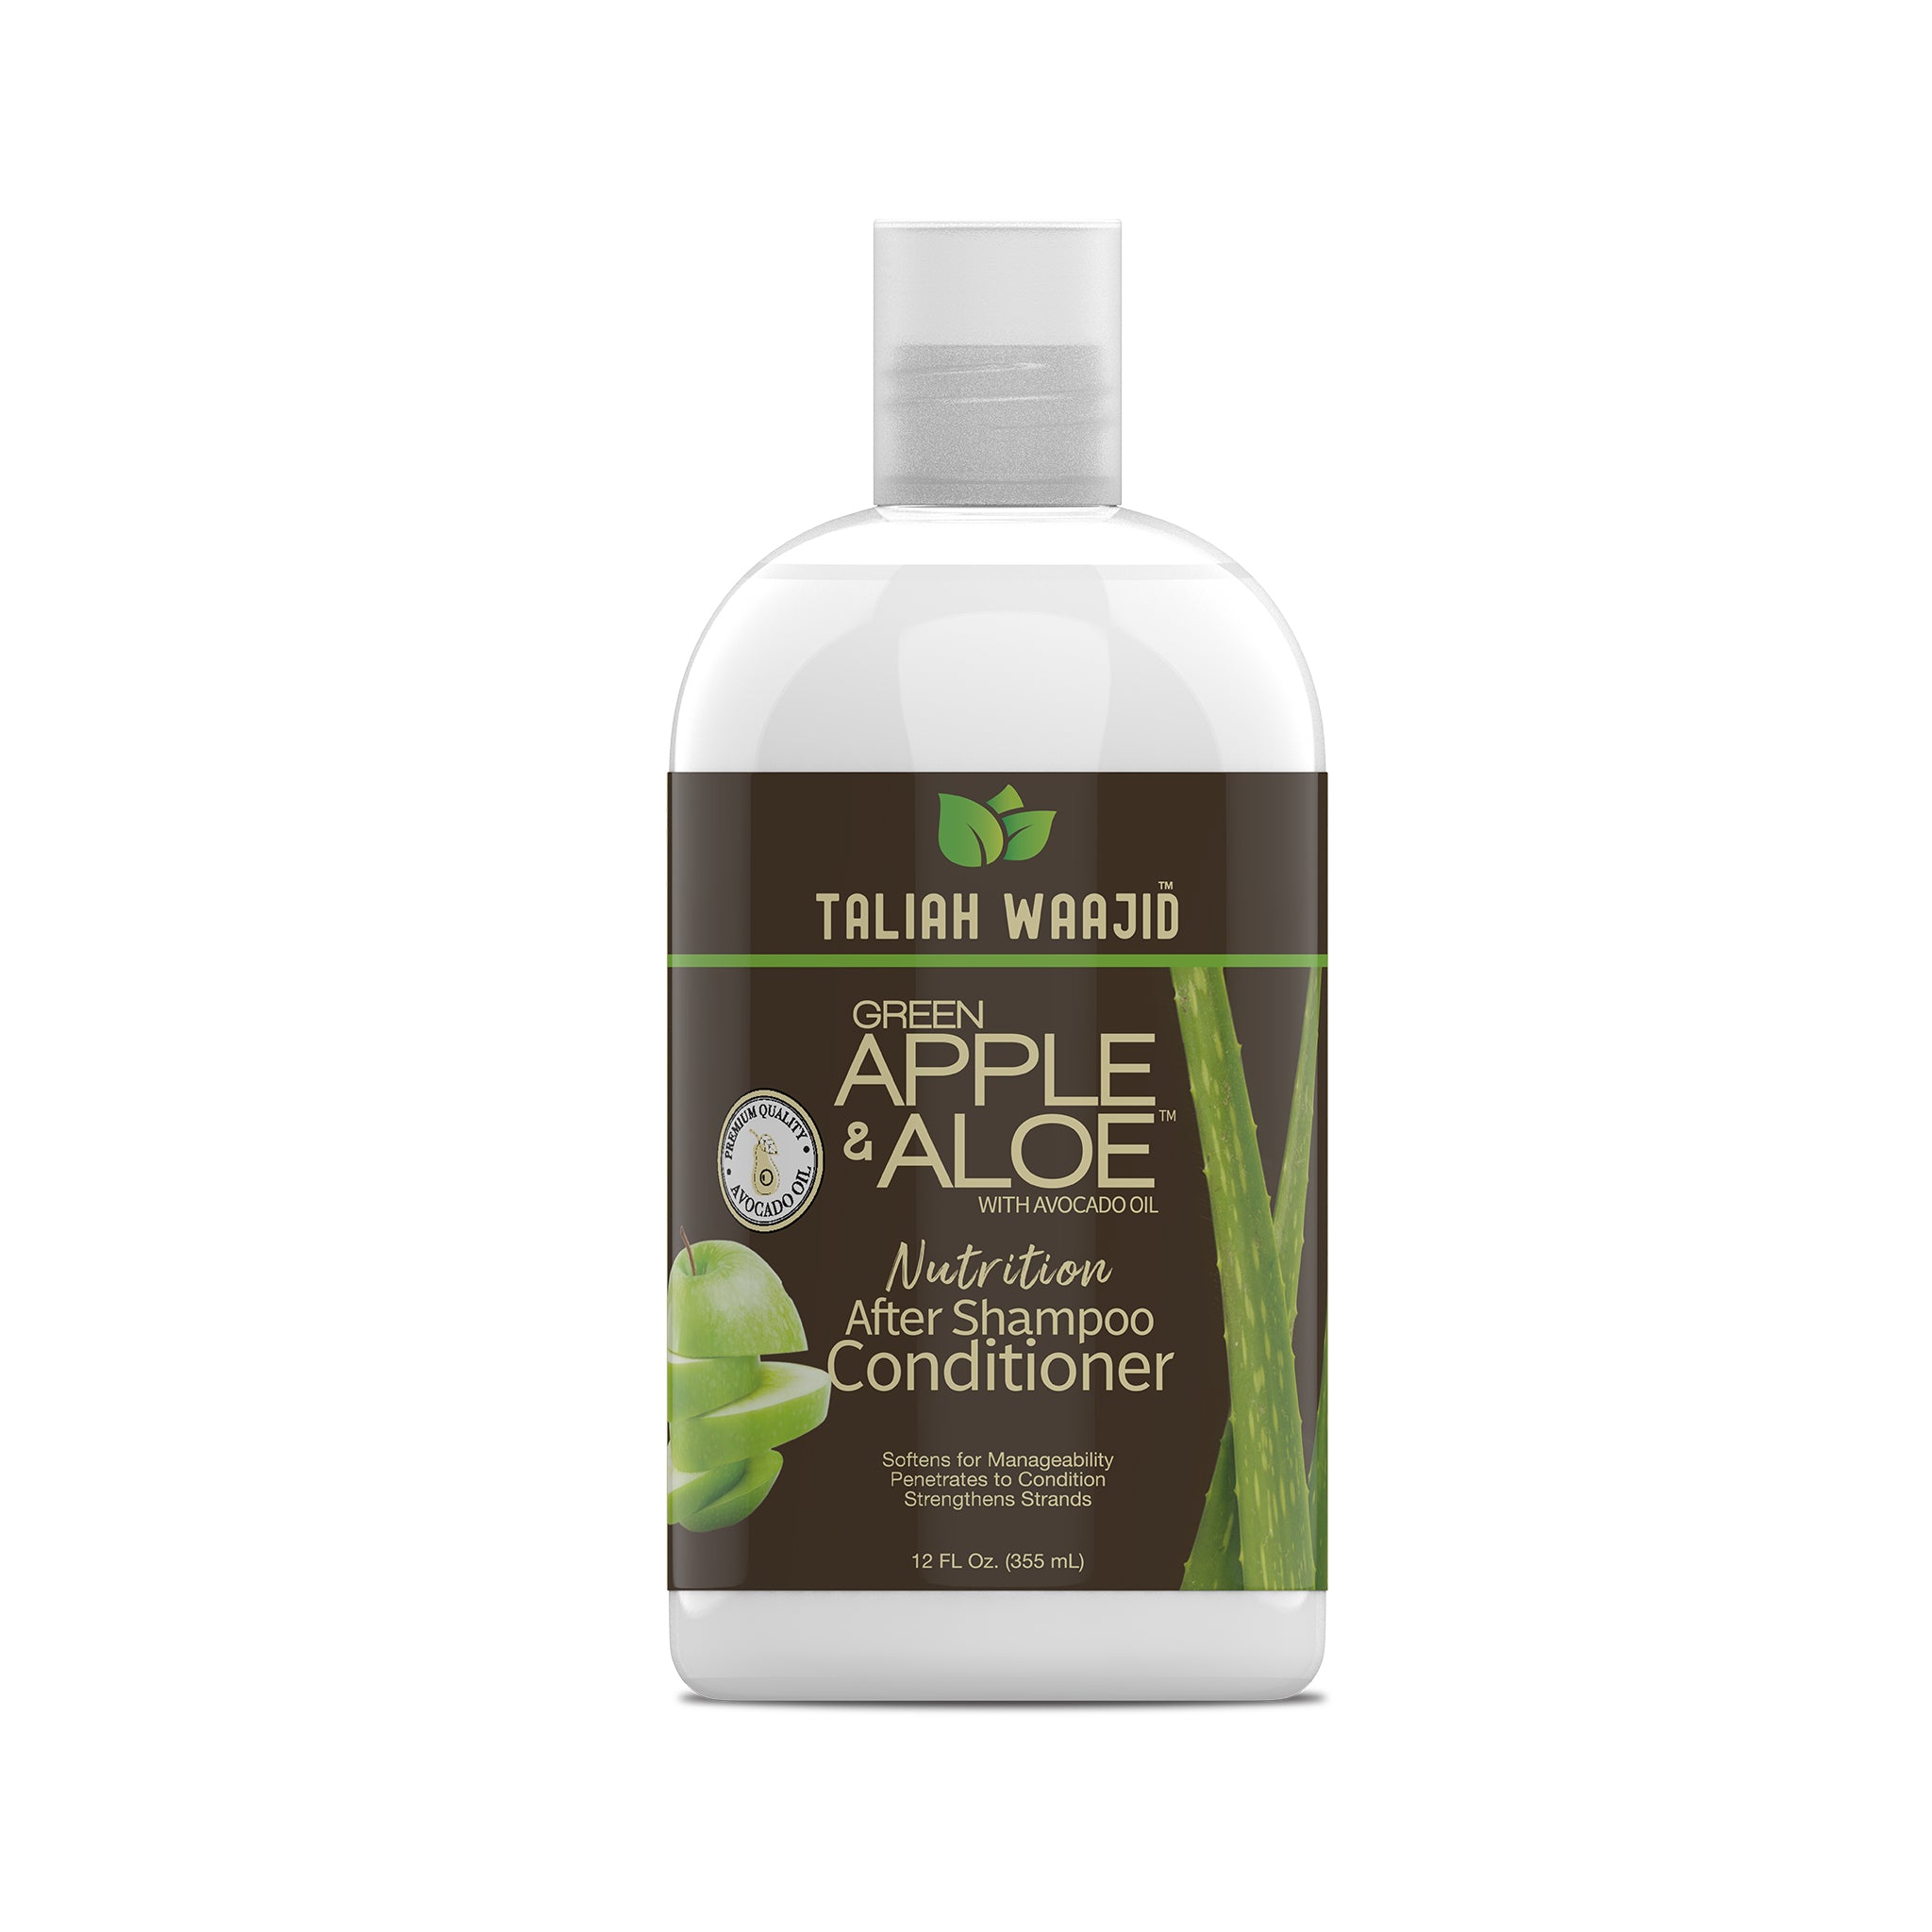 Taliah Waajid Apple Aloe Nutrition After Shampoo Conditioner 12oz